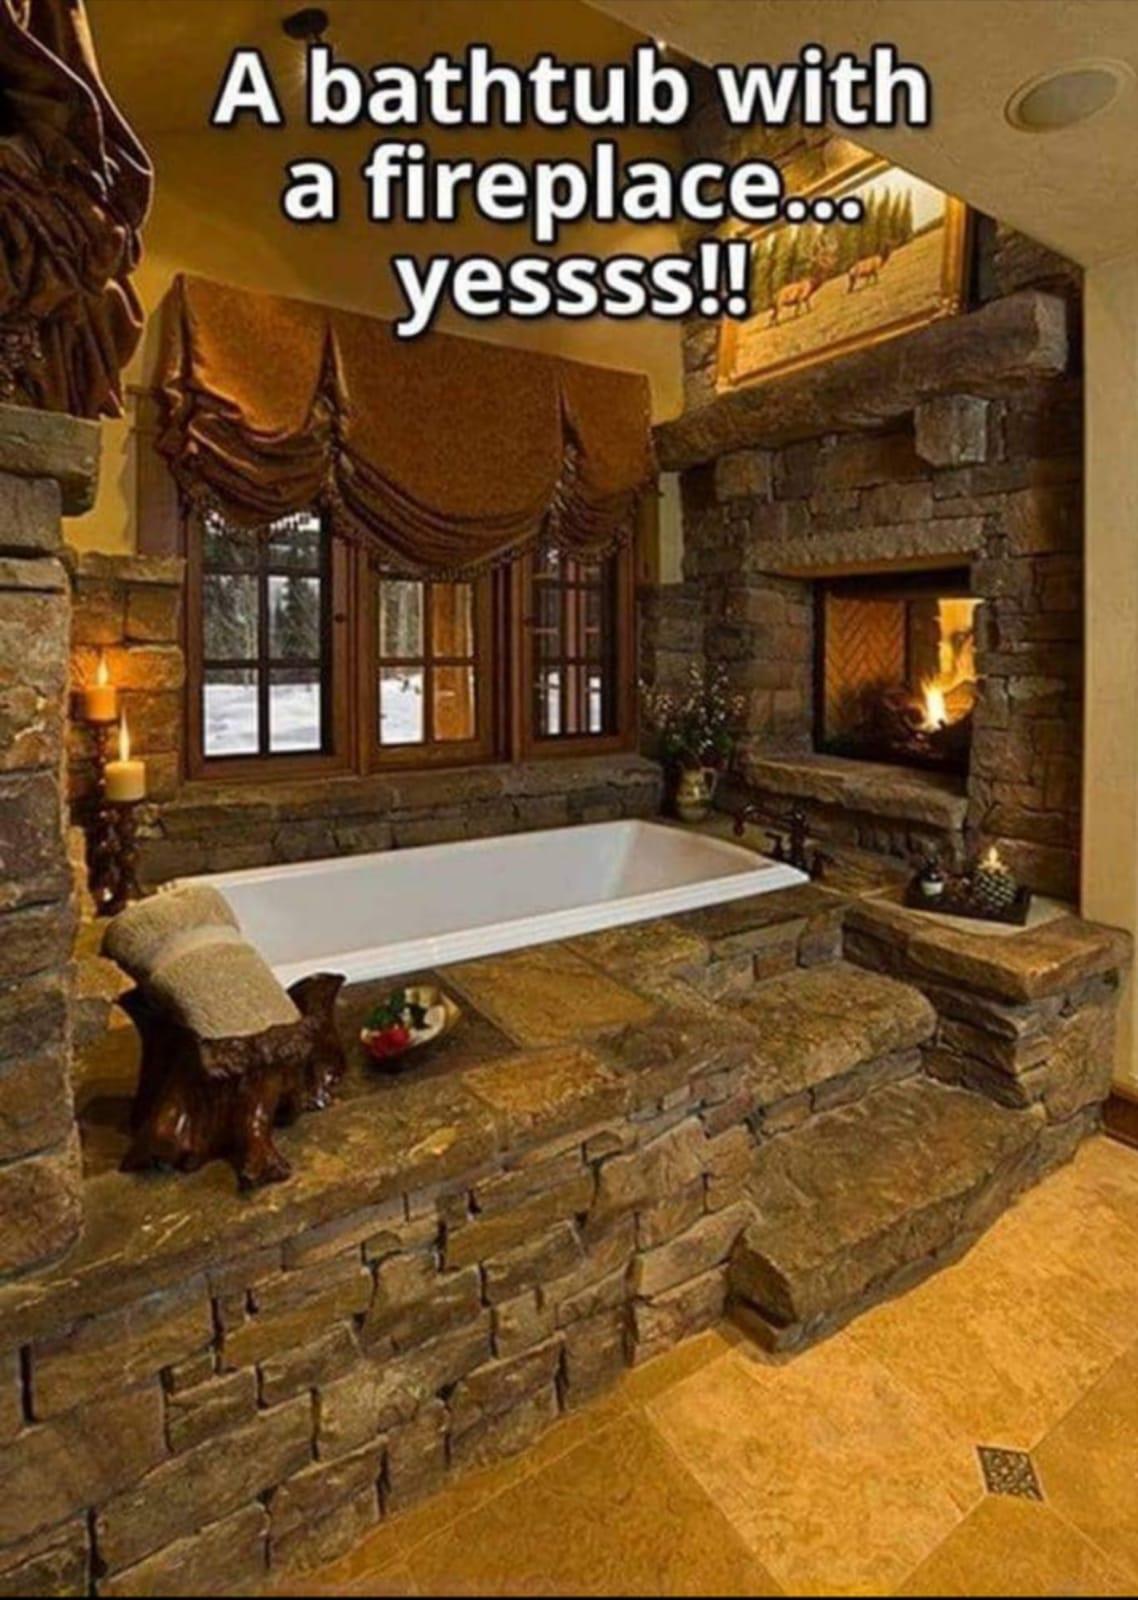 bathtub+with+a+fireplace